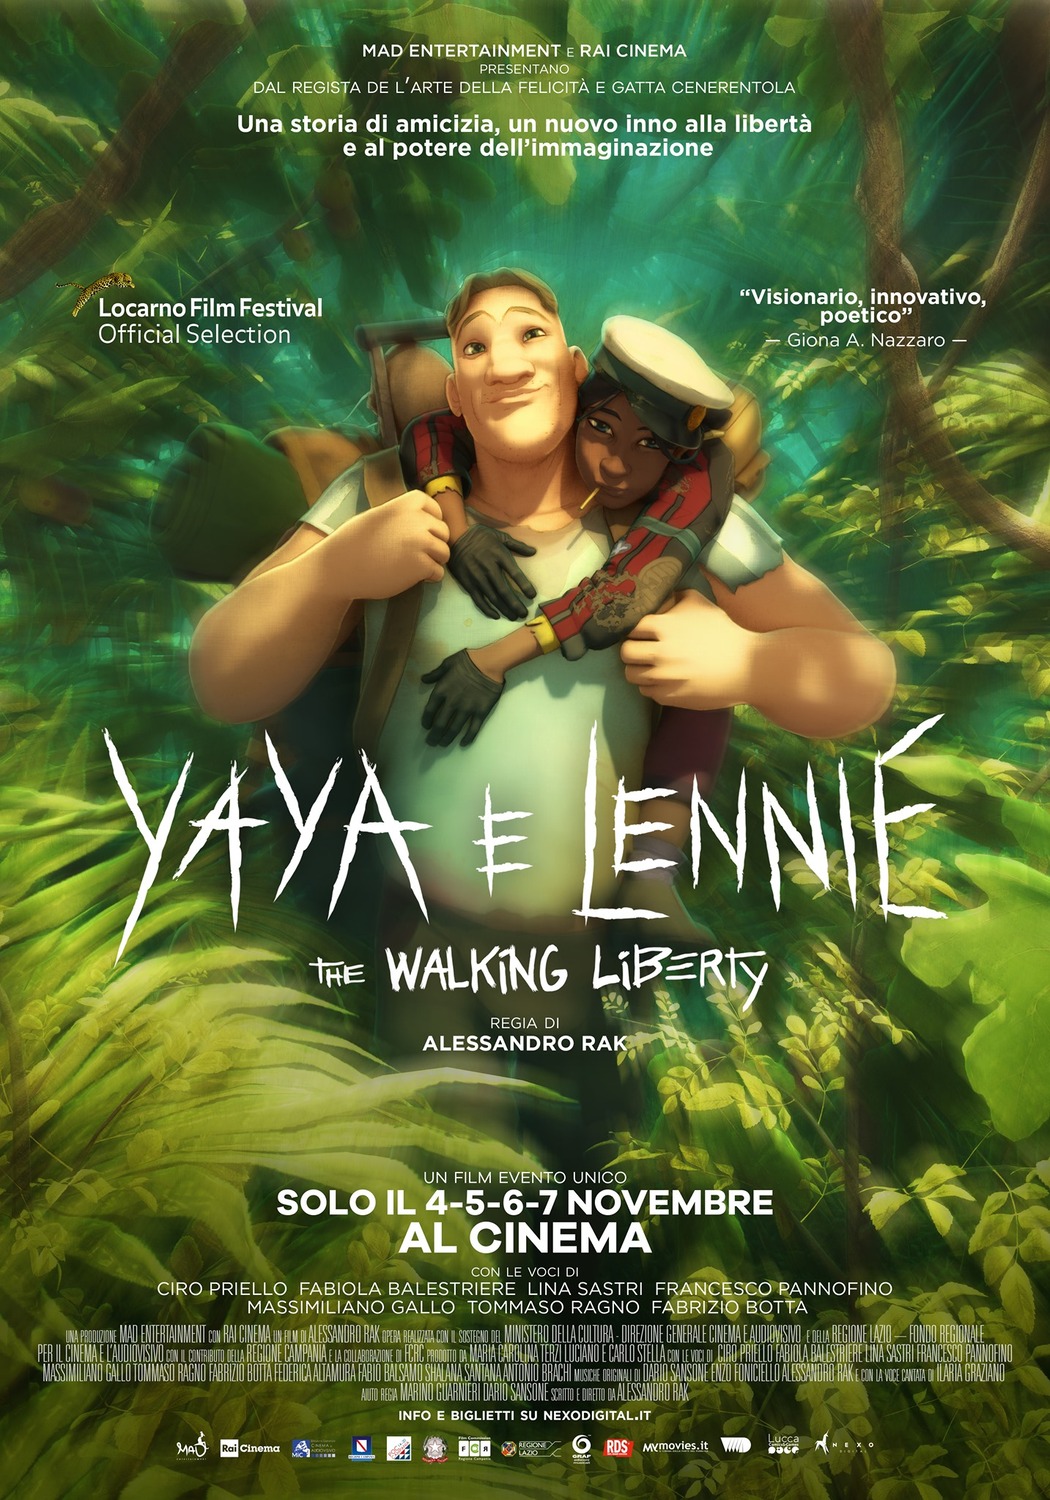 Extra Large Movie Poster Image for Yaya e Lennie: The Walking Liberty 